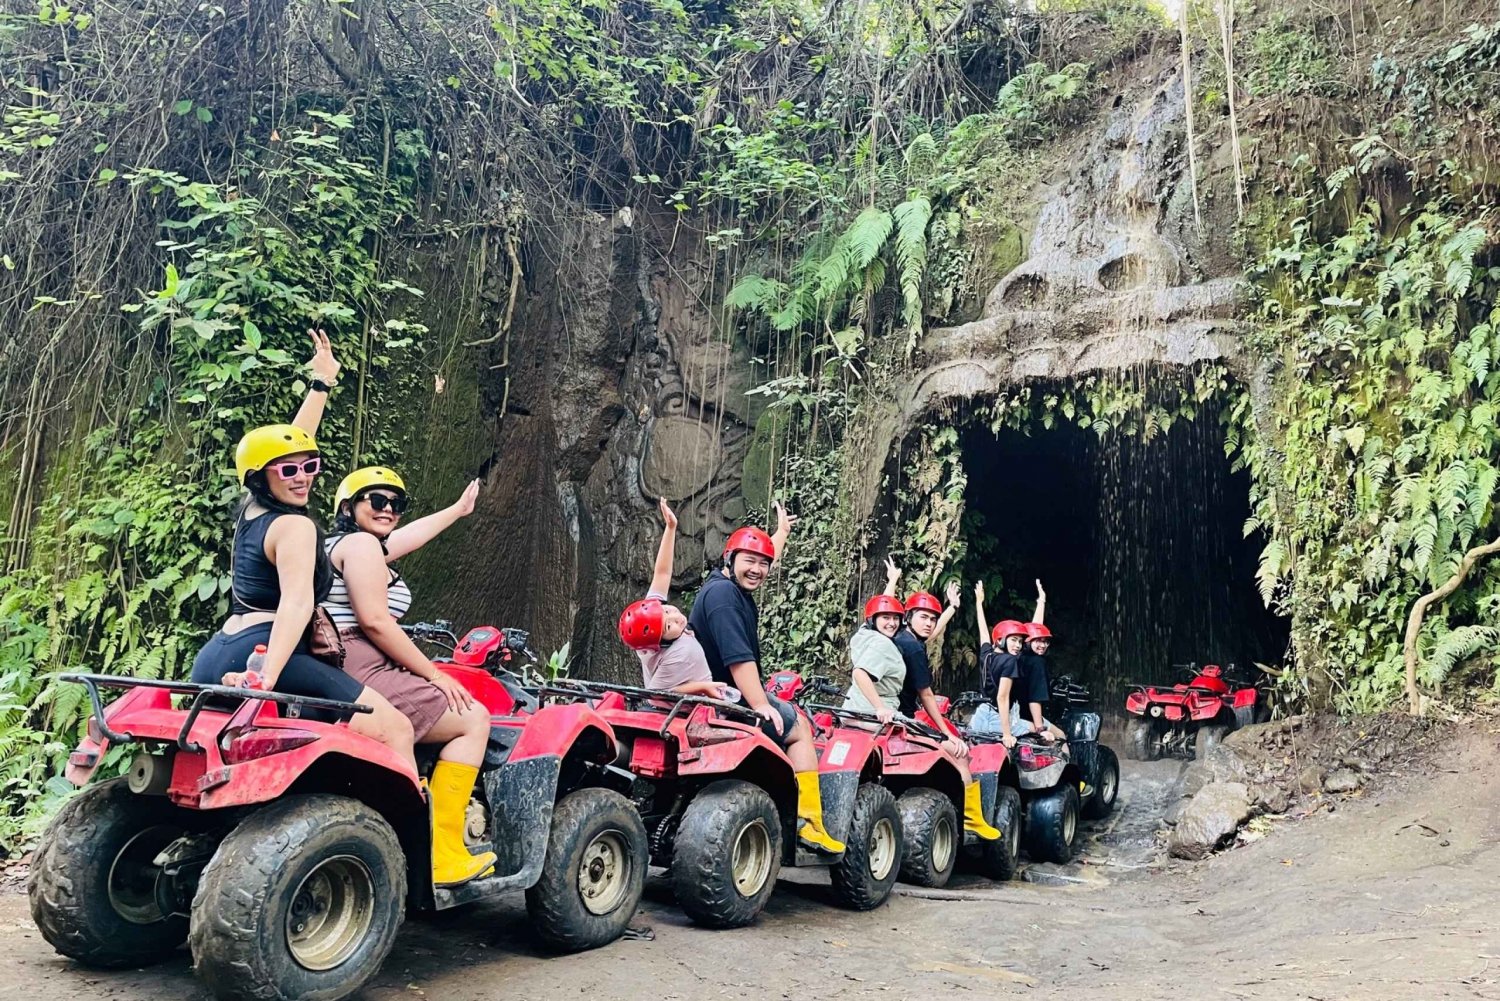 Ubud: Aventura en quad ATV Cara de Gorila con almuerzo